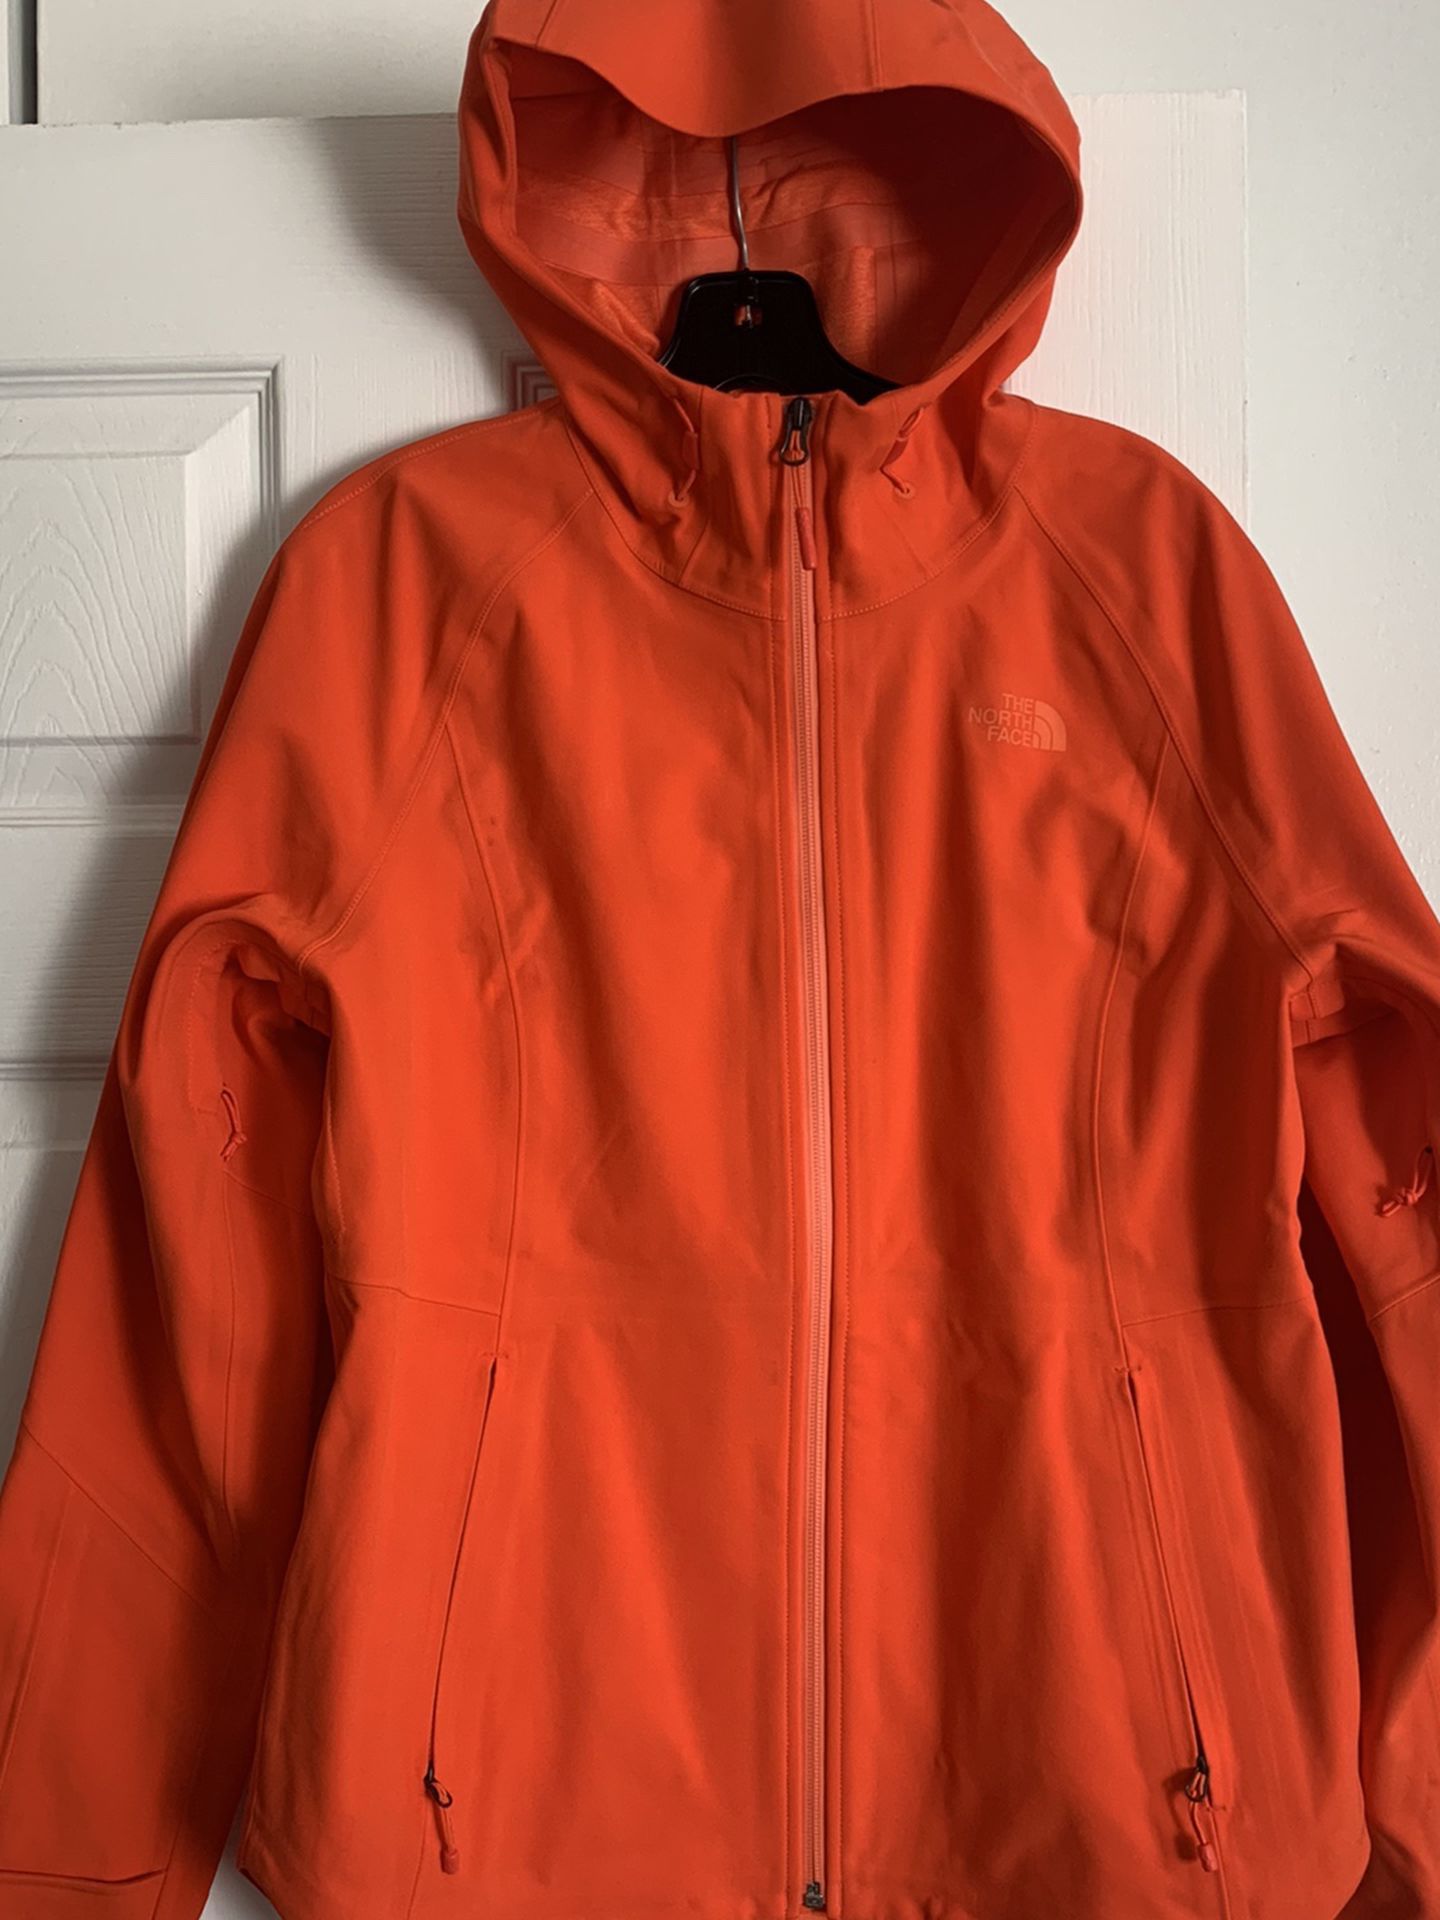 Women’s Apex Flex Gore-Tex Waterproof Jacket Sz. M Retail $220